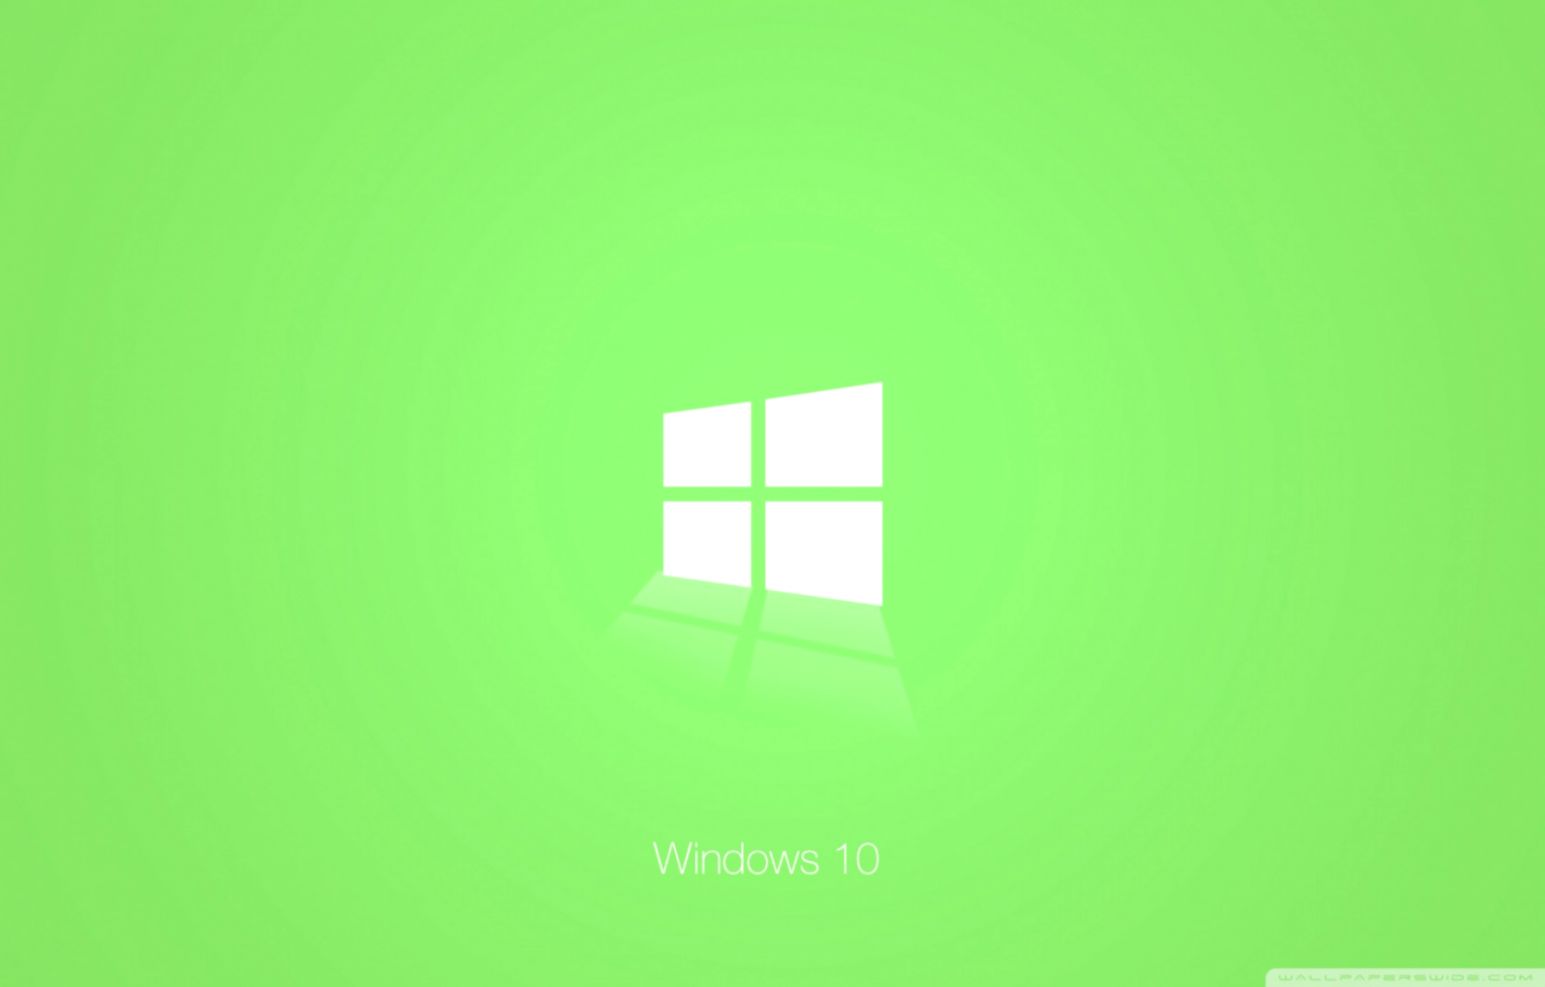 Windows 10 Green ❤ 4k Hd Desktop Wallpaper For 4k Ultra - Apple Wallpaper  Windows 10 - 1545x987 Wallpaper 